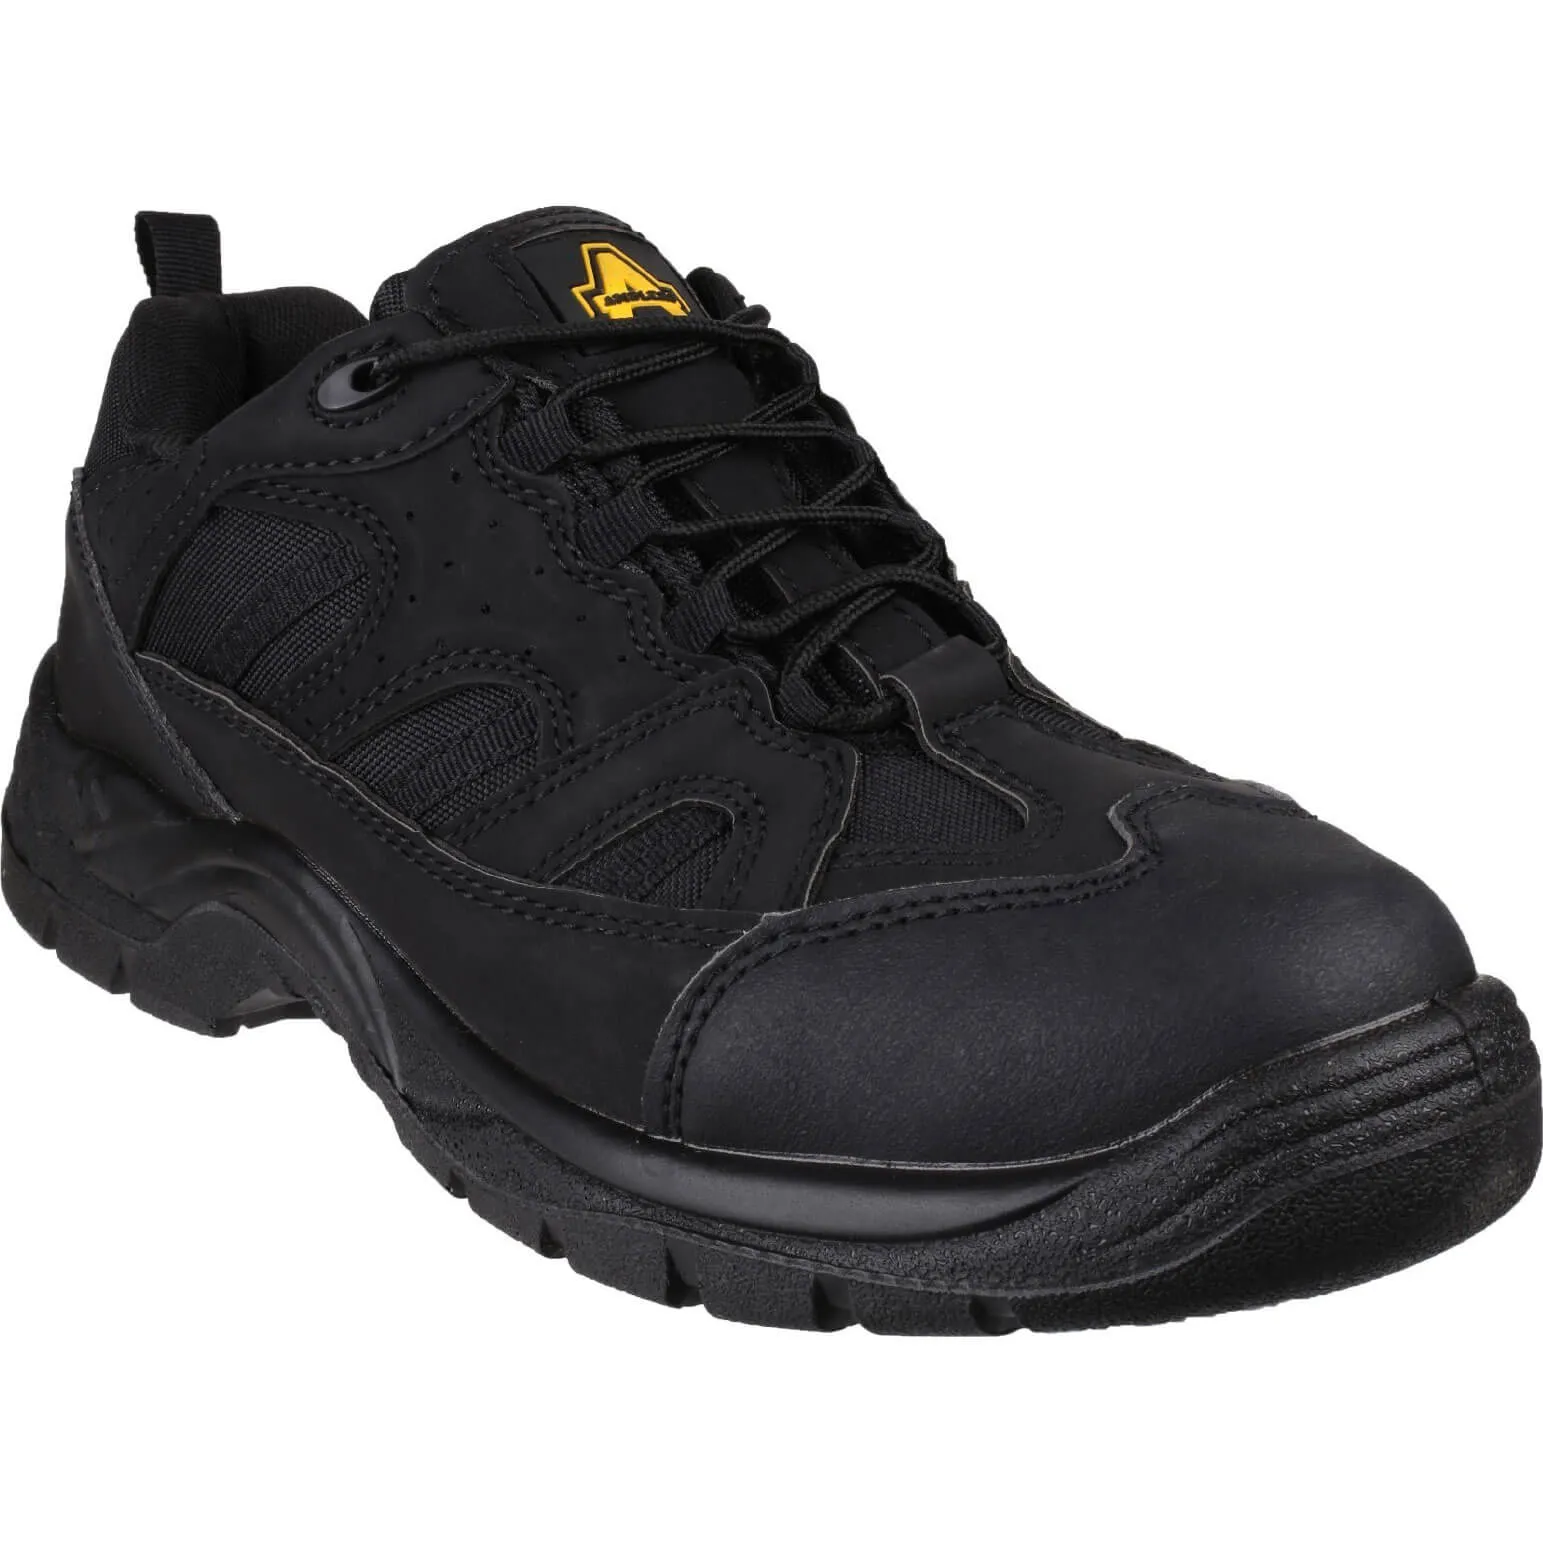 Amblers Safety FS214 Vegan Friendly Safety Shoes - Black, Size 13